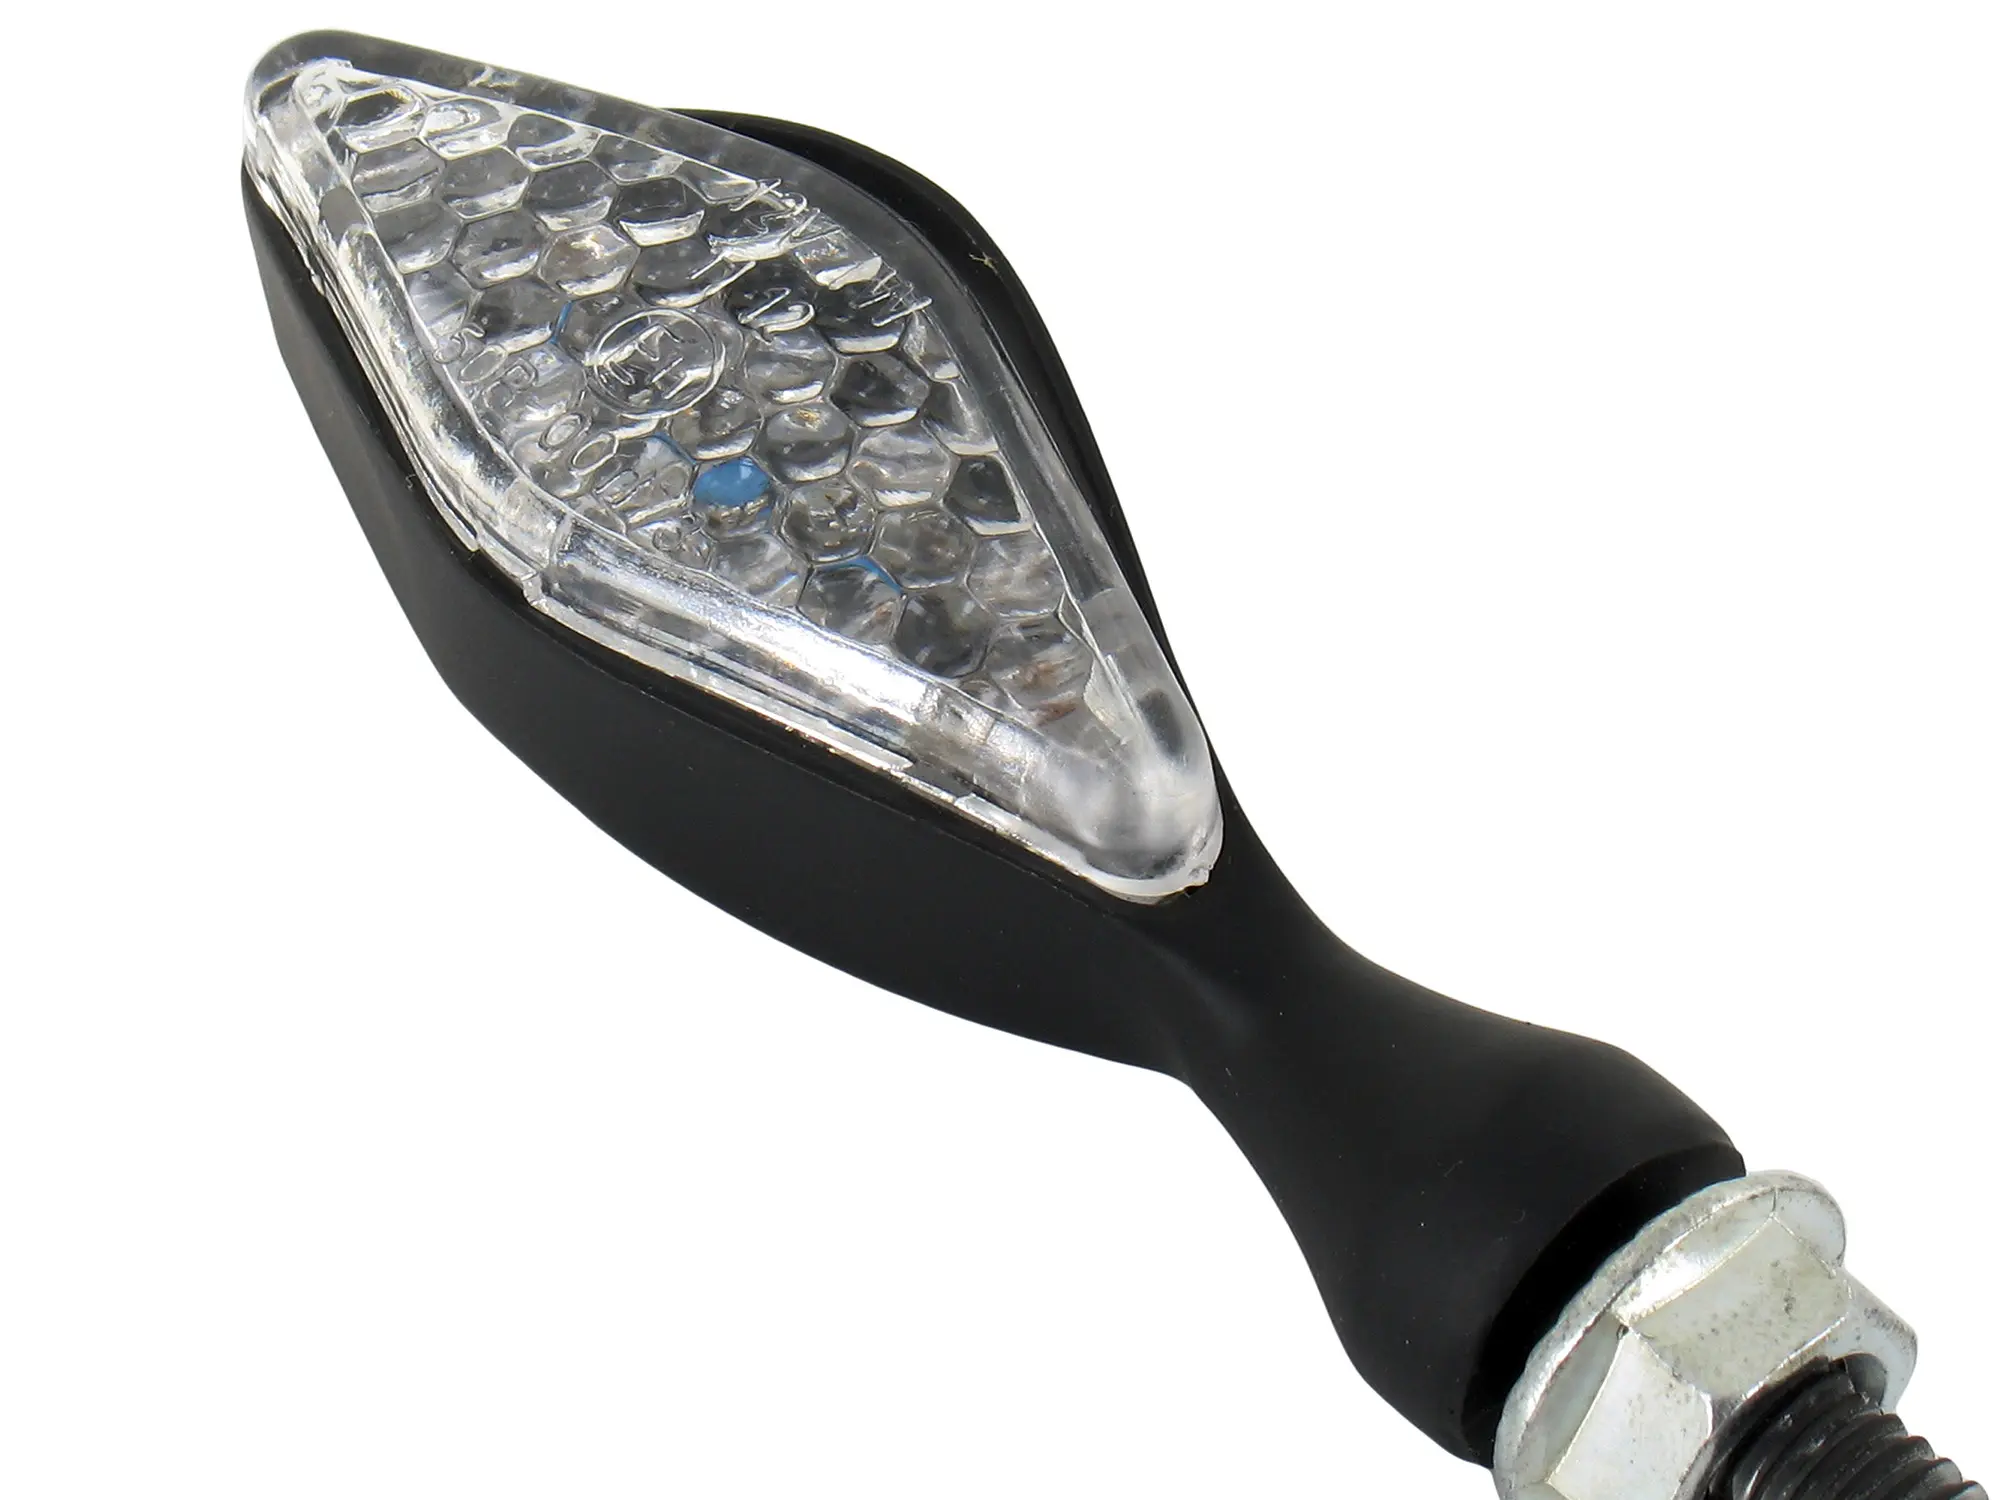 1x Mini-Blinker 12V LED in Mattschwarz mit Klarglas, E-geprüft - rechts, Item no: 99002281 - Image 1